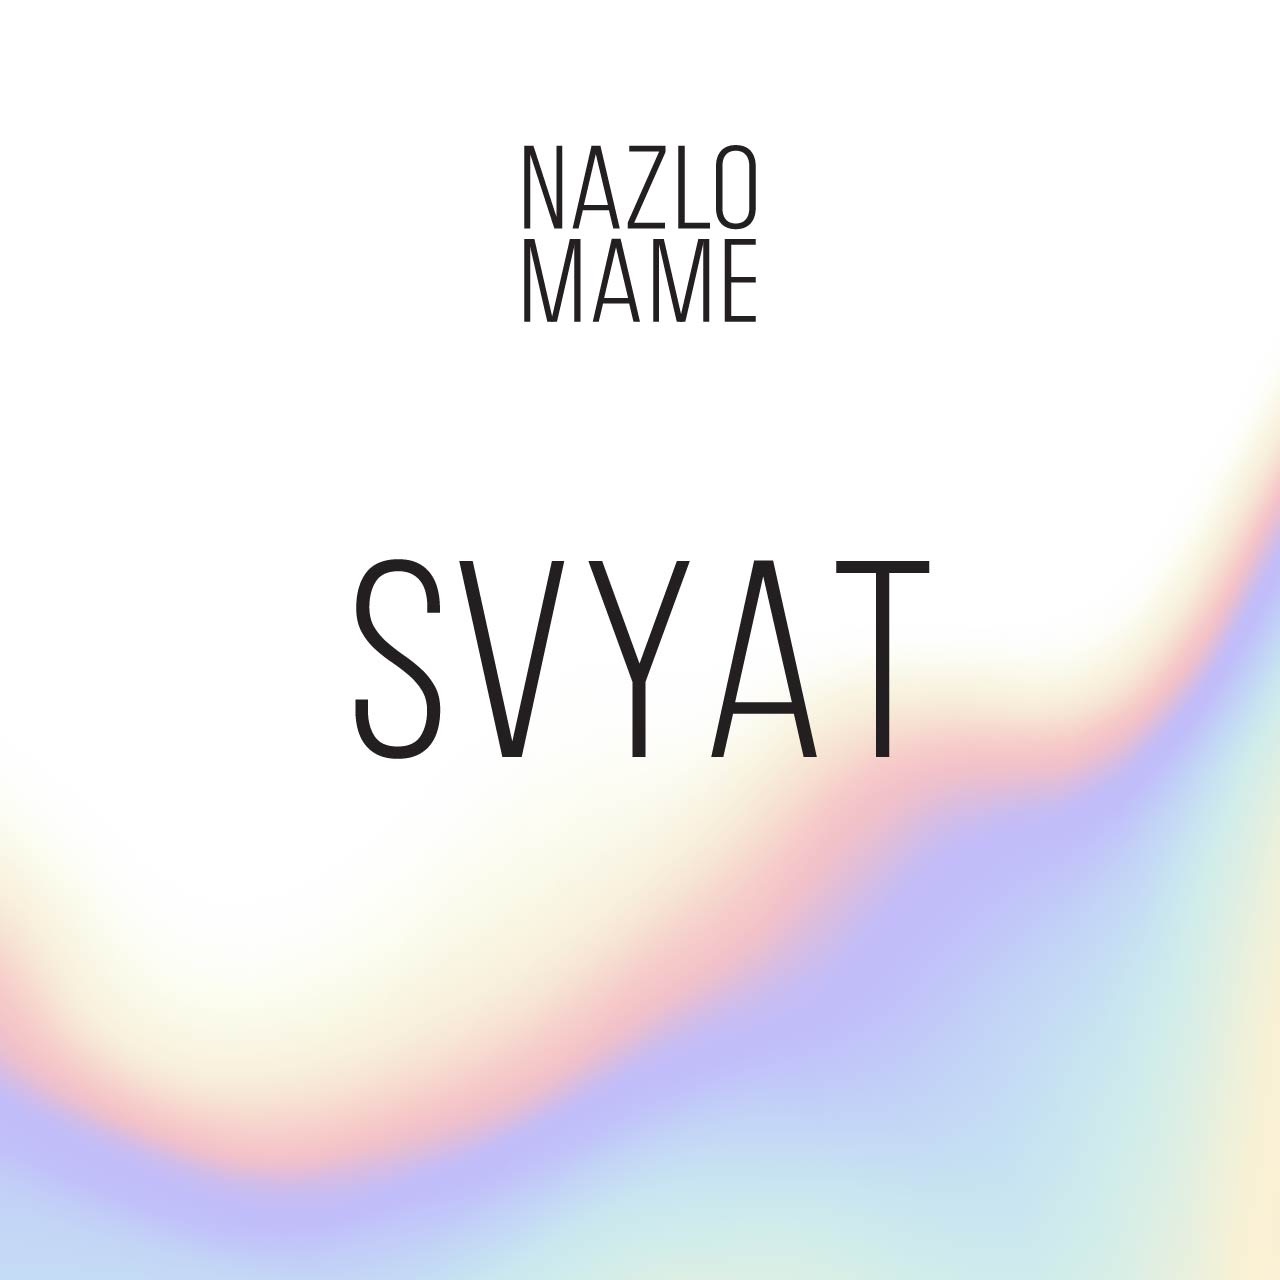 Download NAZLO MAME // Mutabor 23 jul 2022